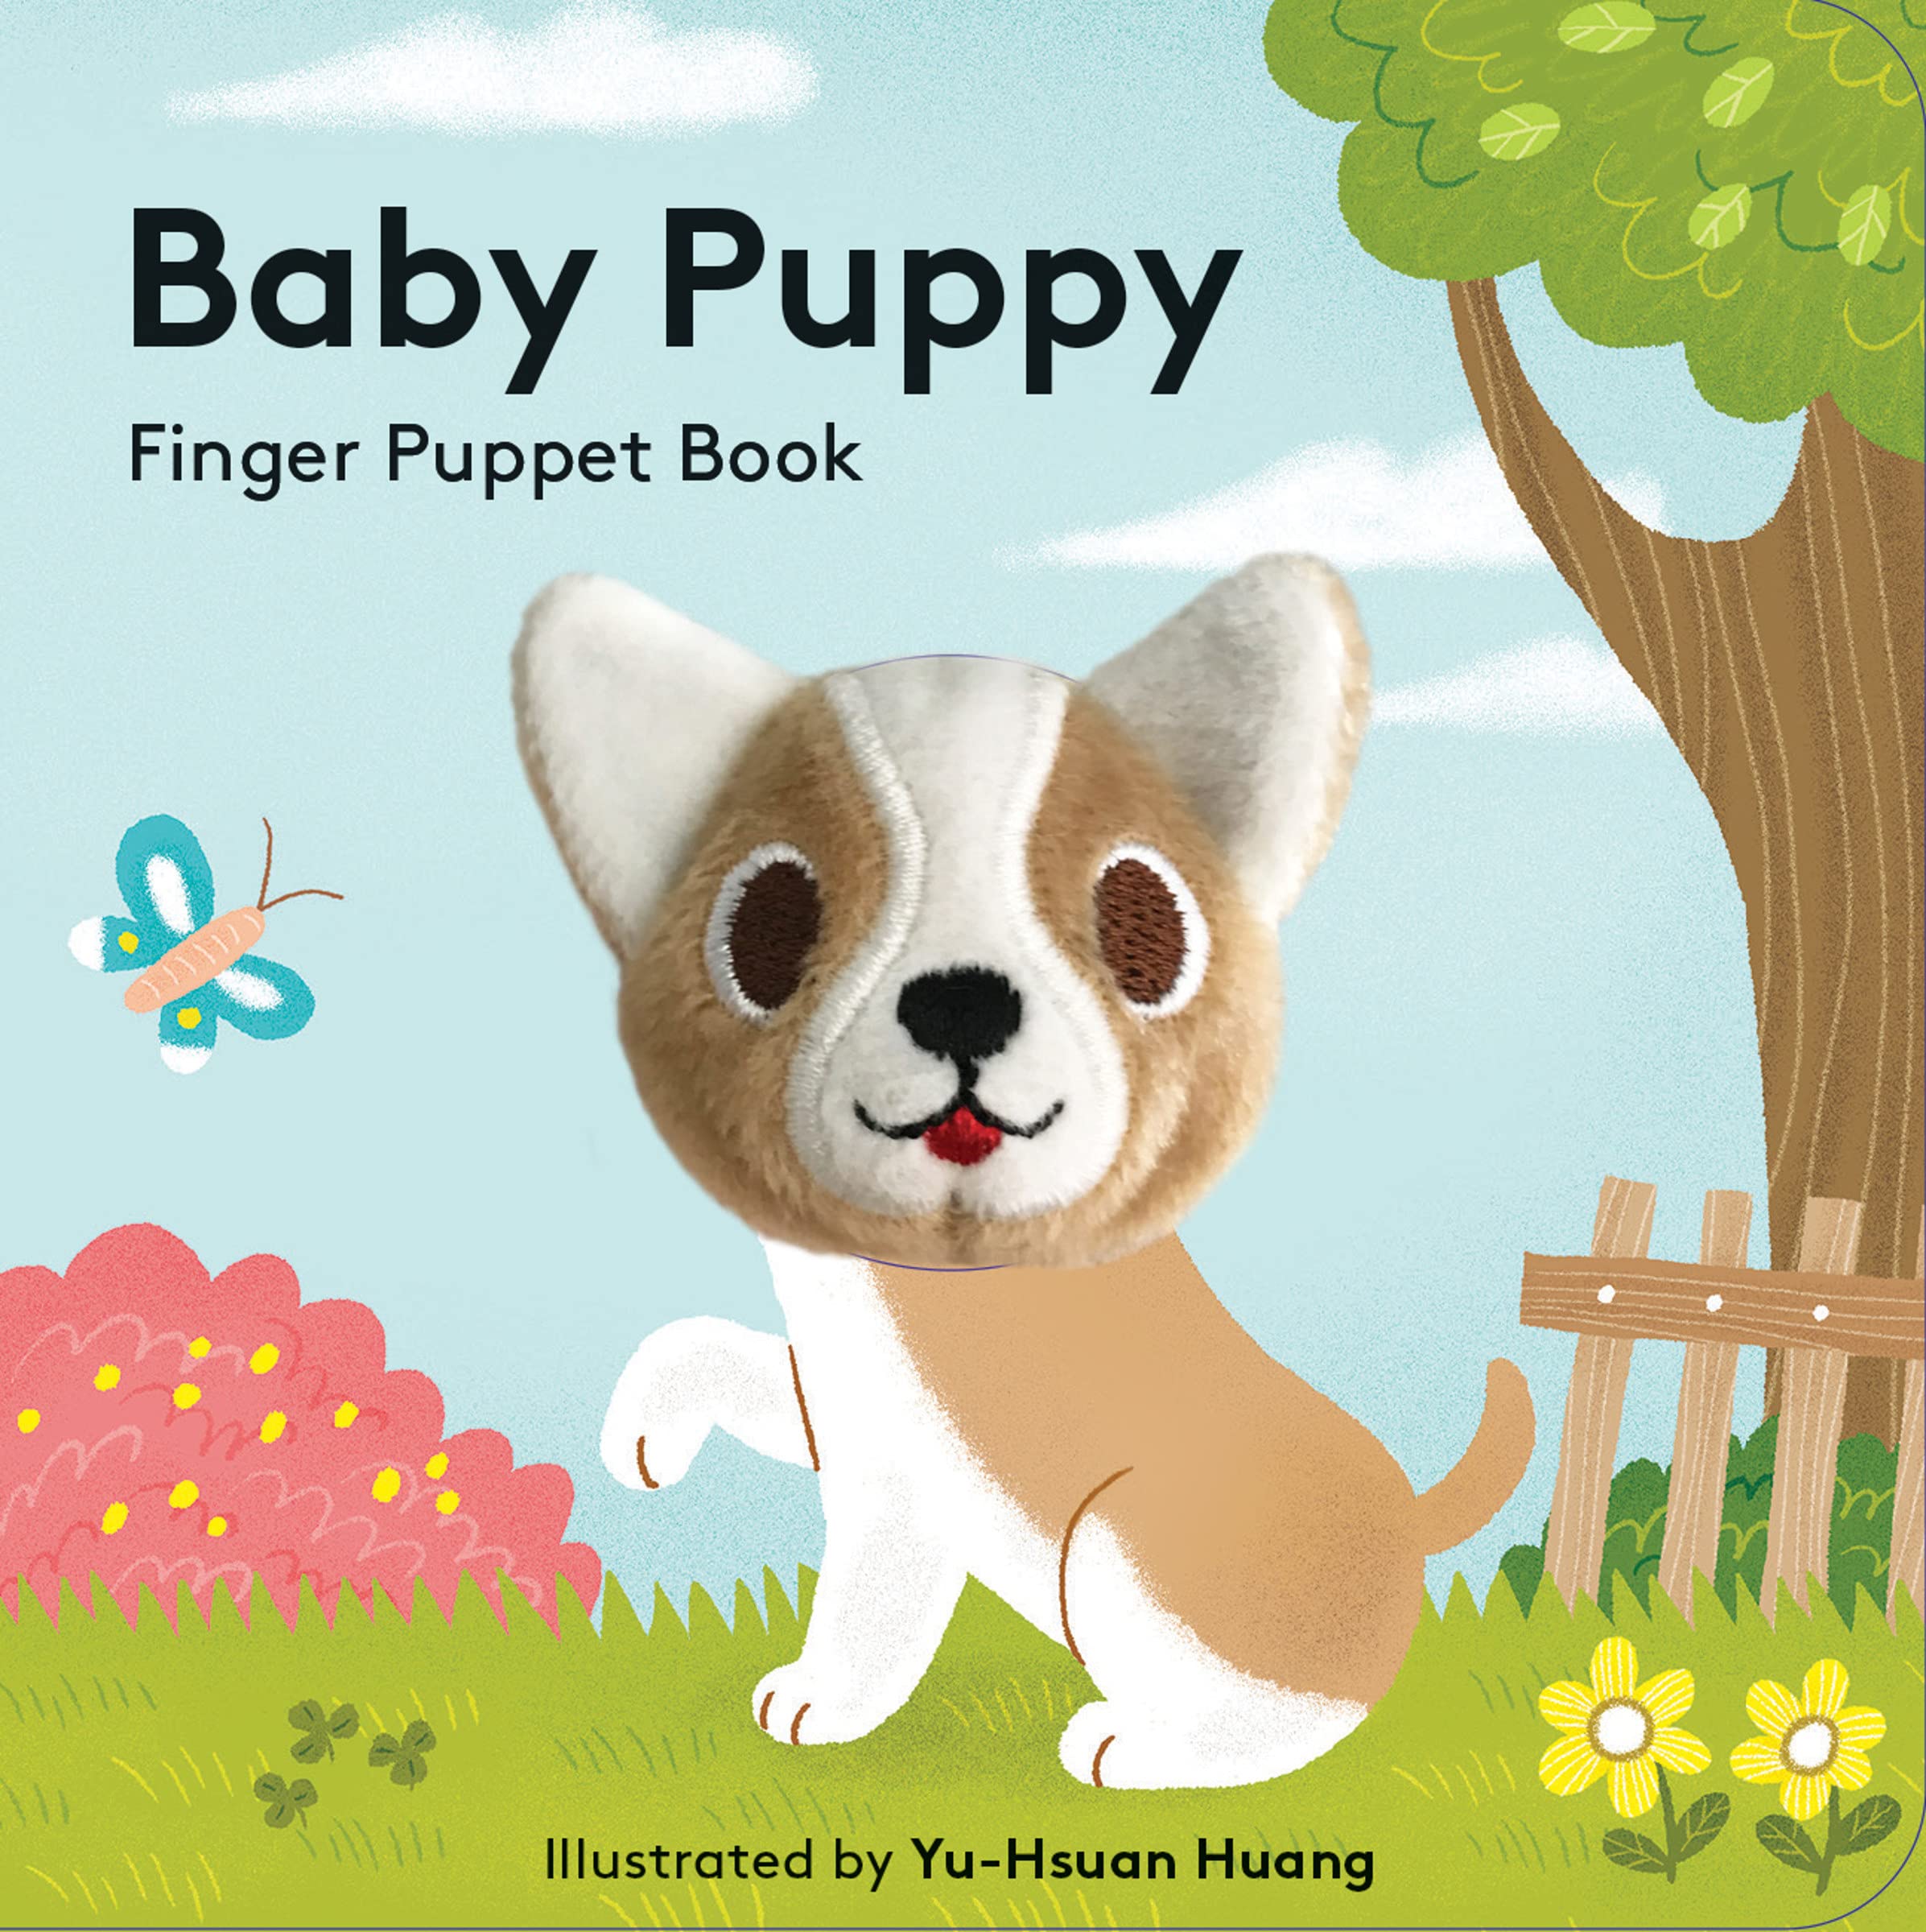 Baby Puppy Finger Puppet Book - Twinkle Twinkle Little One